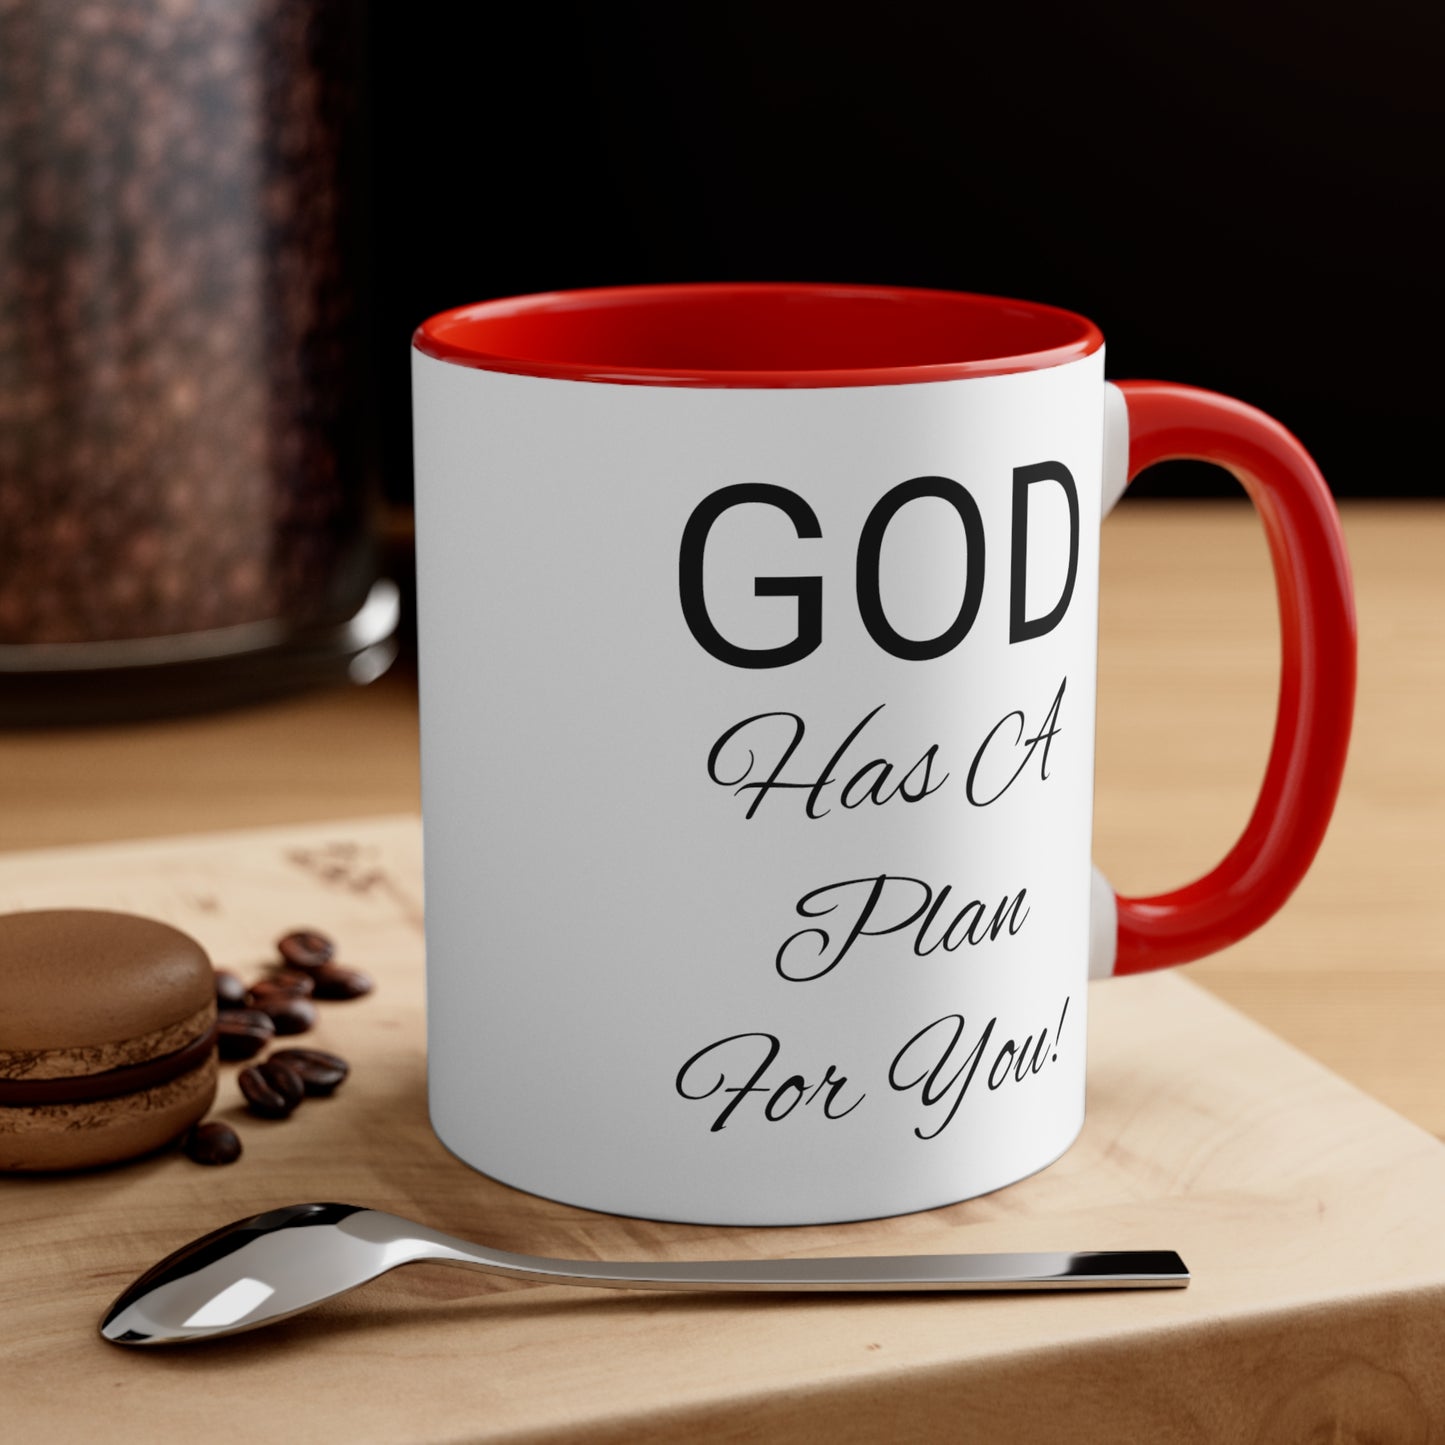 God Has A Plan For You Accent Coffee Mug, 11oz